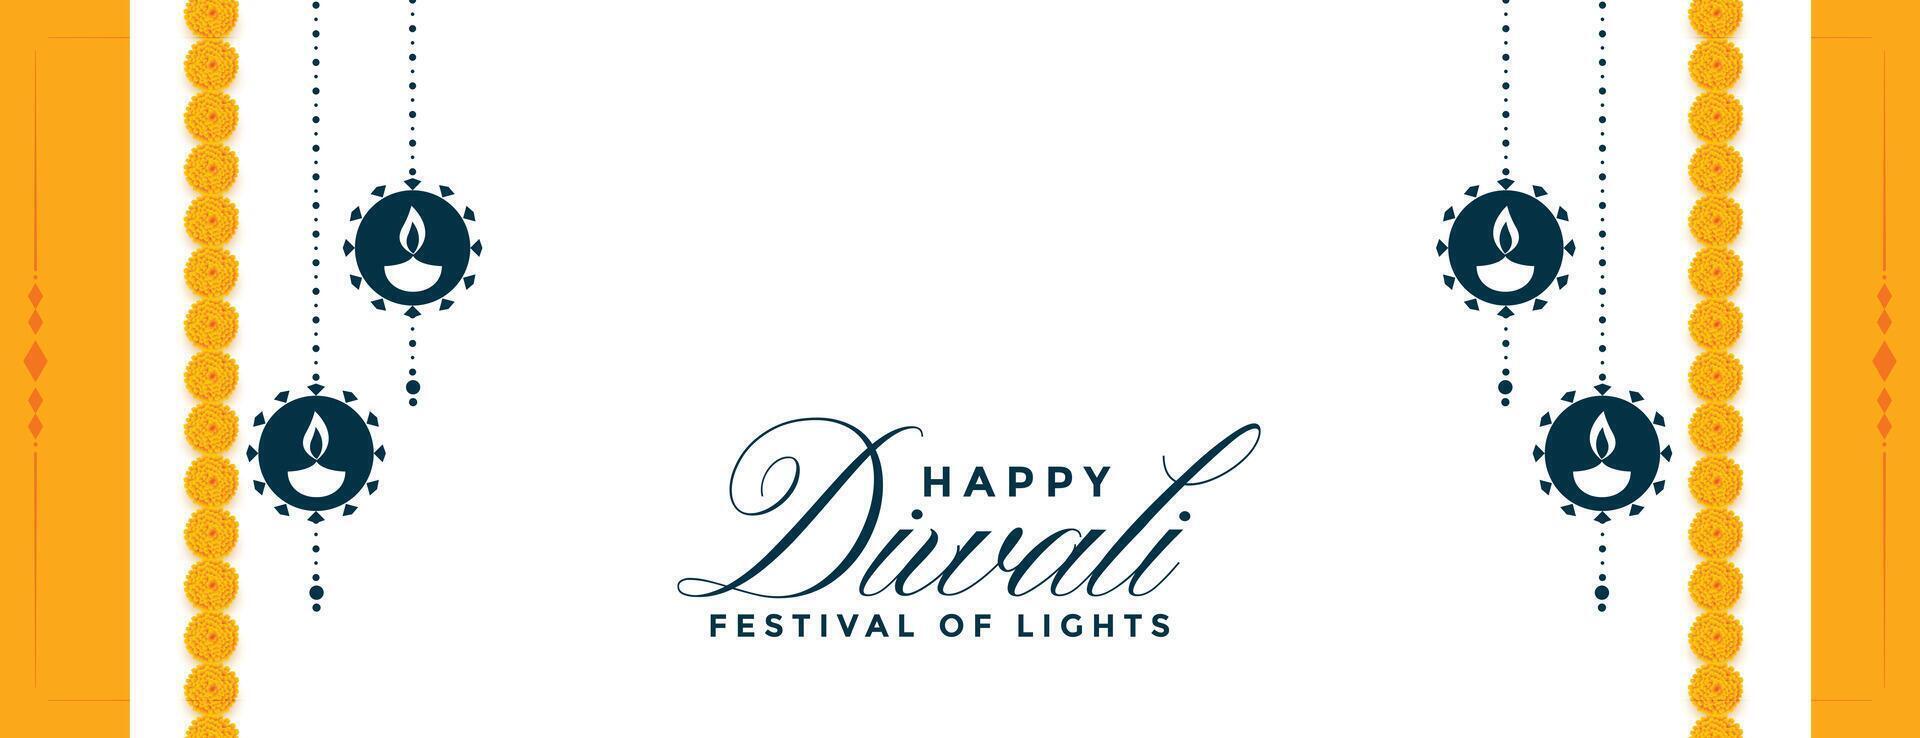 happy diwali hindu banner with flower and diya design vector